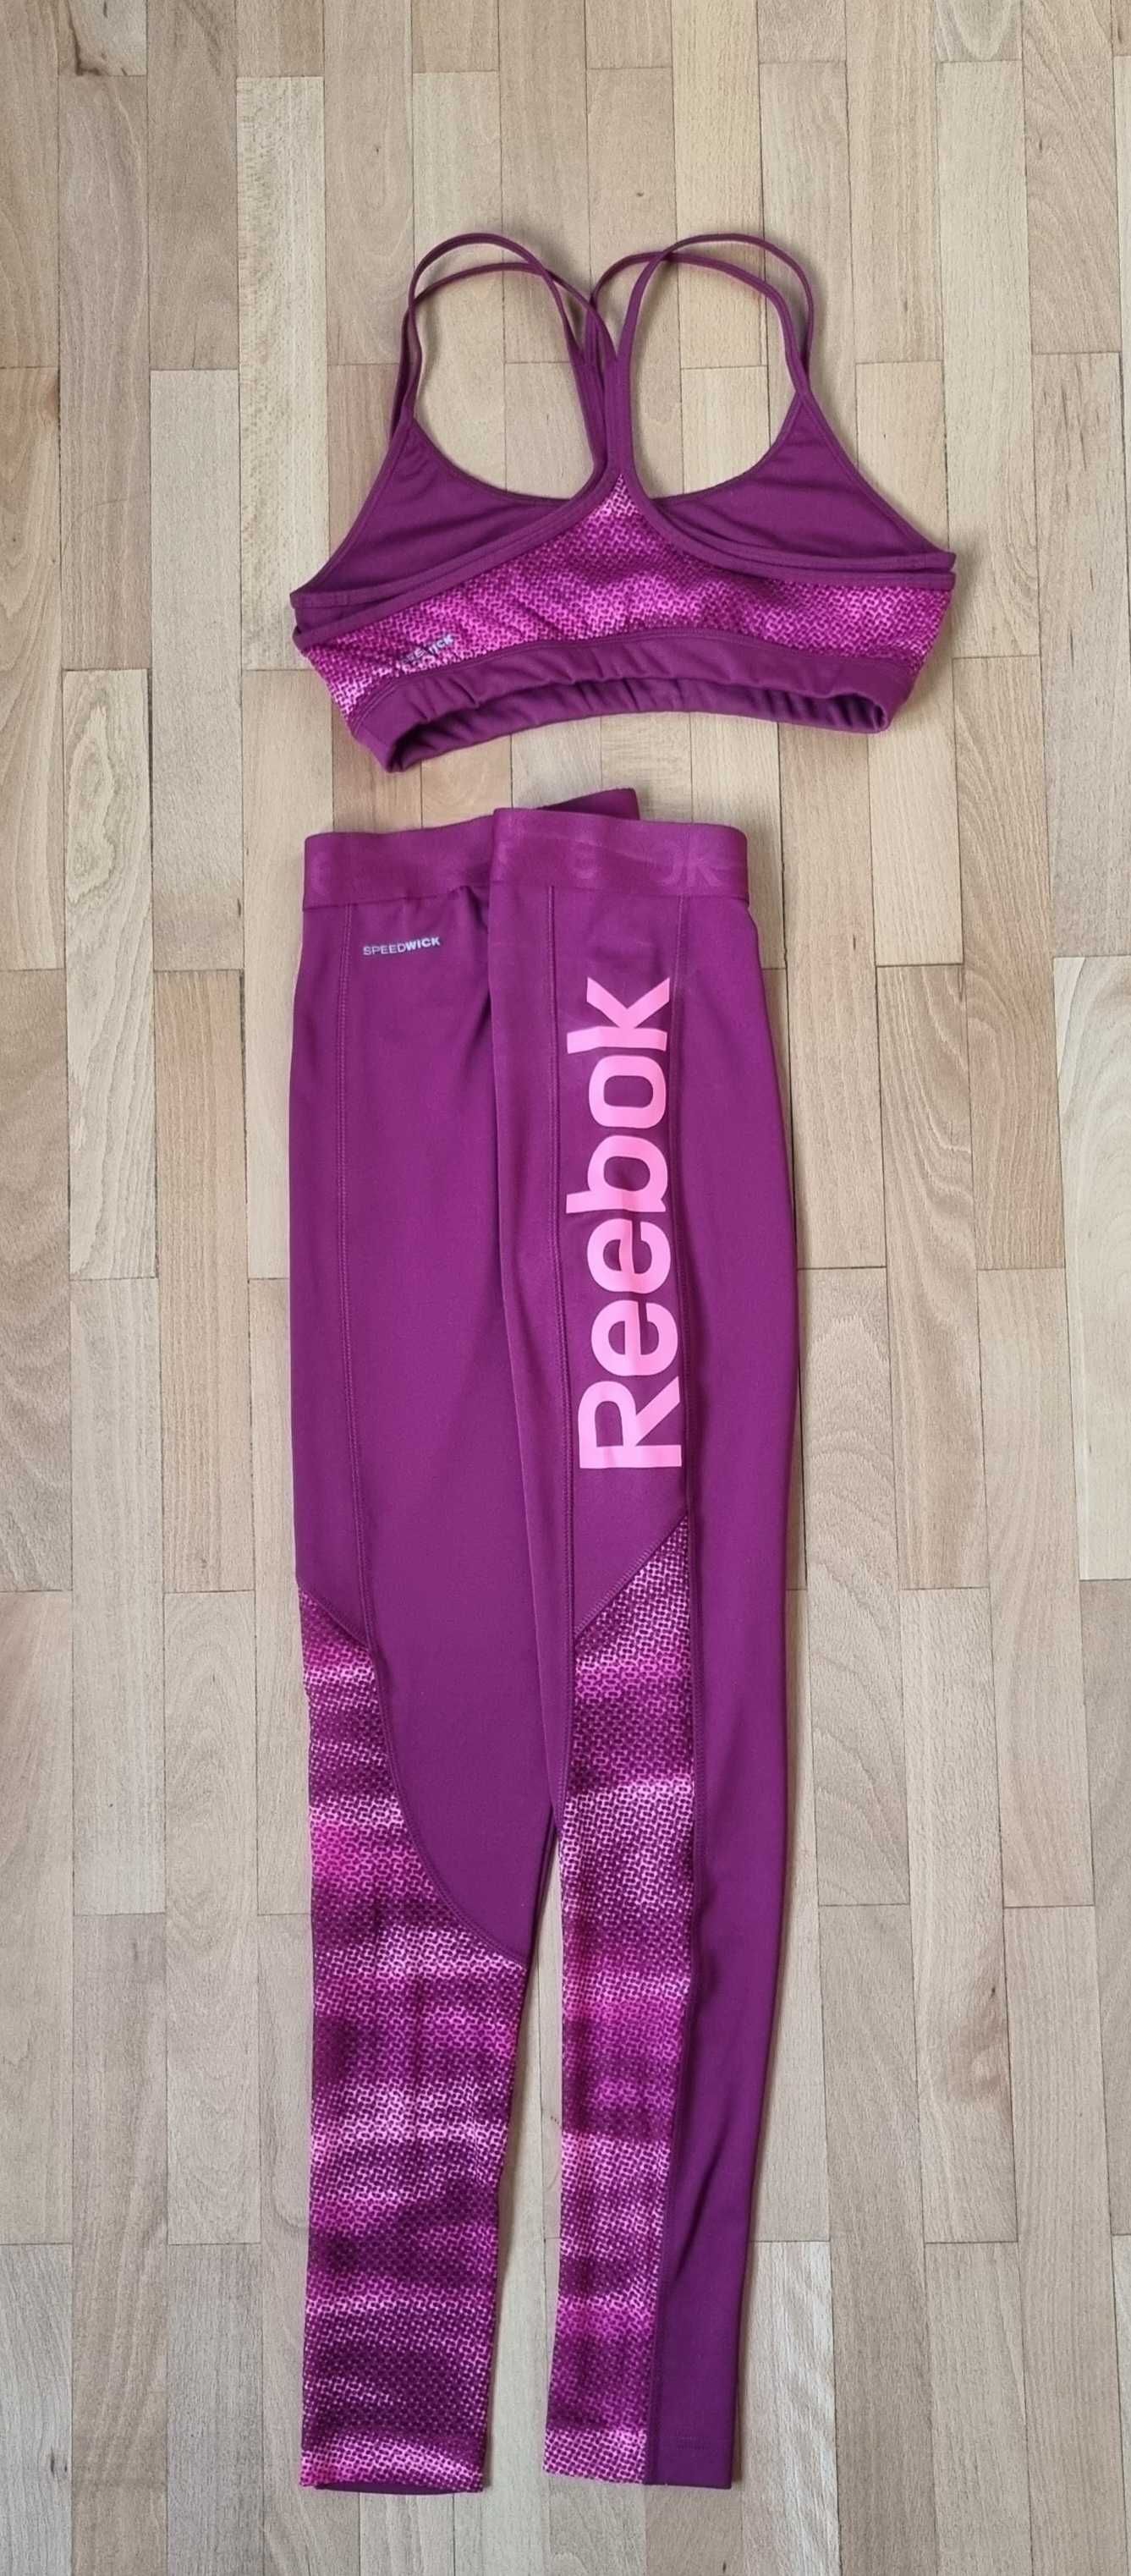 Дамски спортен комплект Reebok.